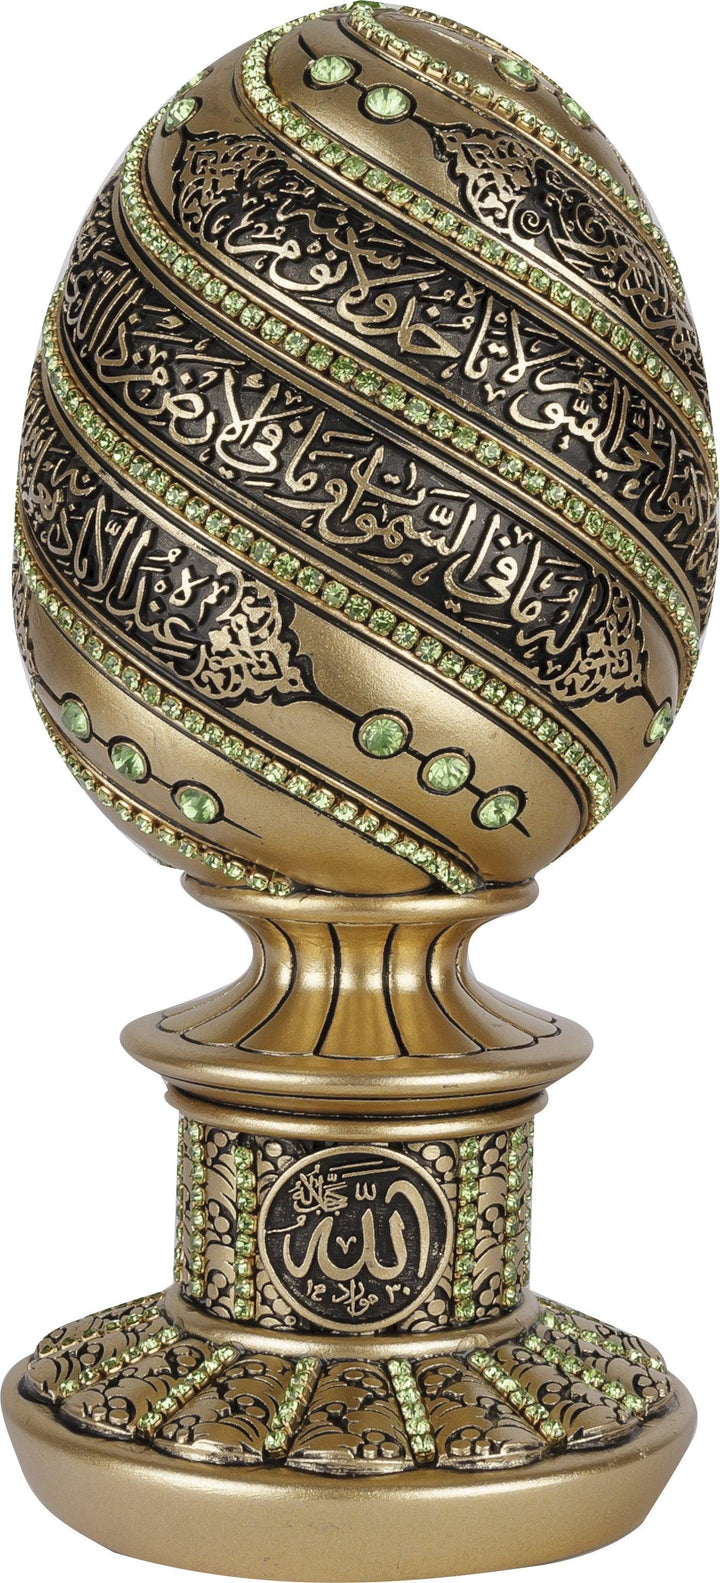 A beautiful golden and black egg sculpture engraved with Ayatul Kurs-BB-0931- 1650-theislamcshop.com